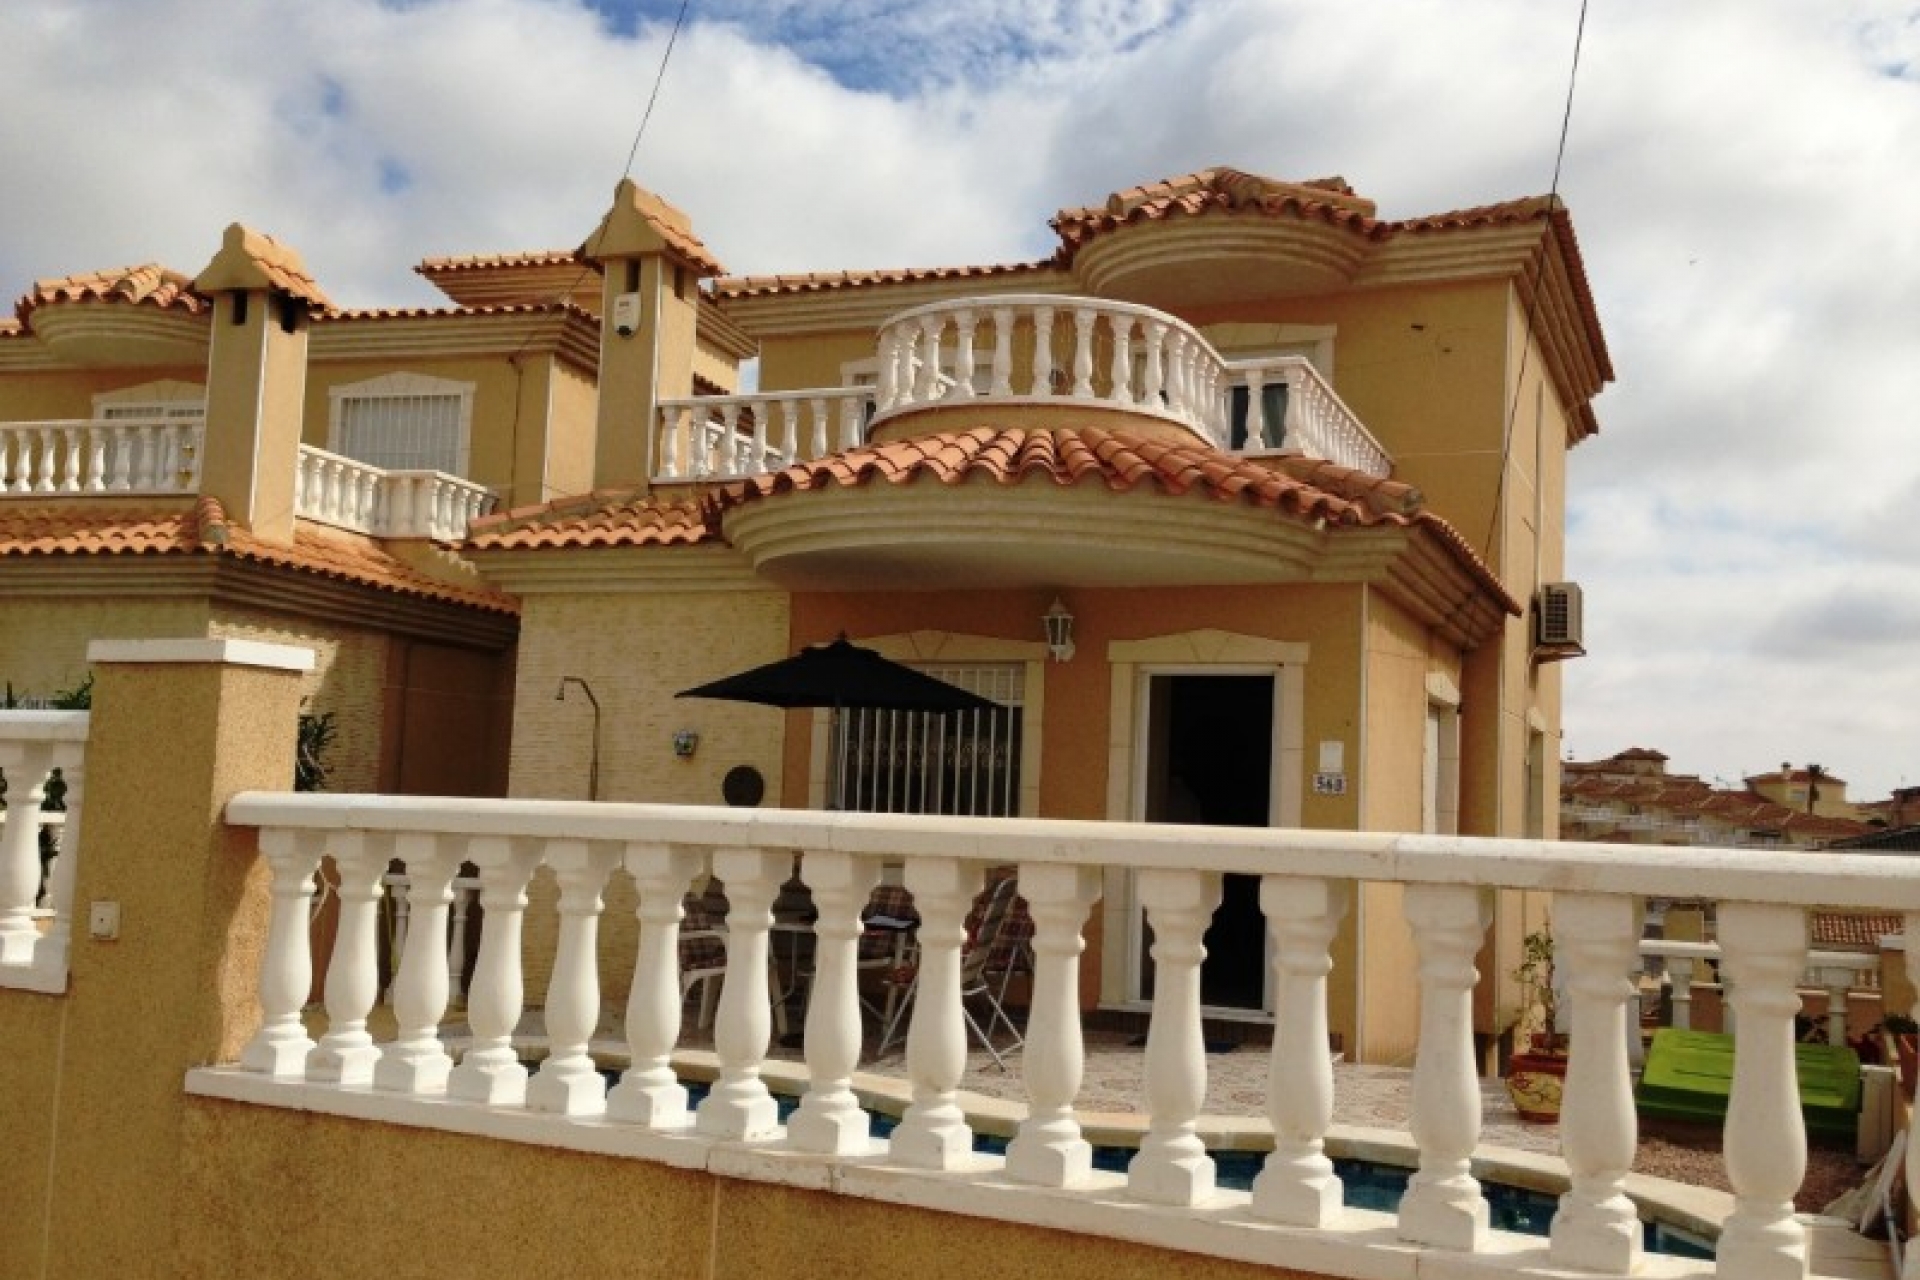 El Galan cheap property for sale, cheap bargain property near Villaq Martin Cabo Roig and La Zenia, Costa Blanca